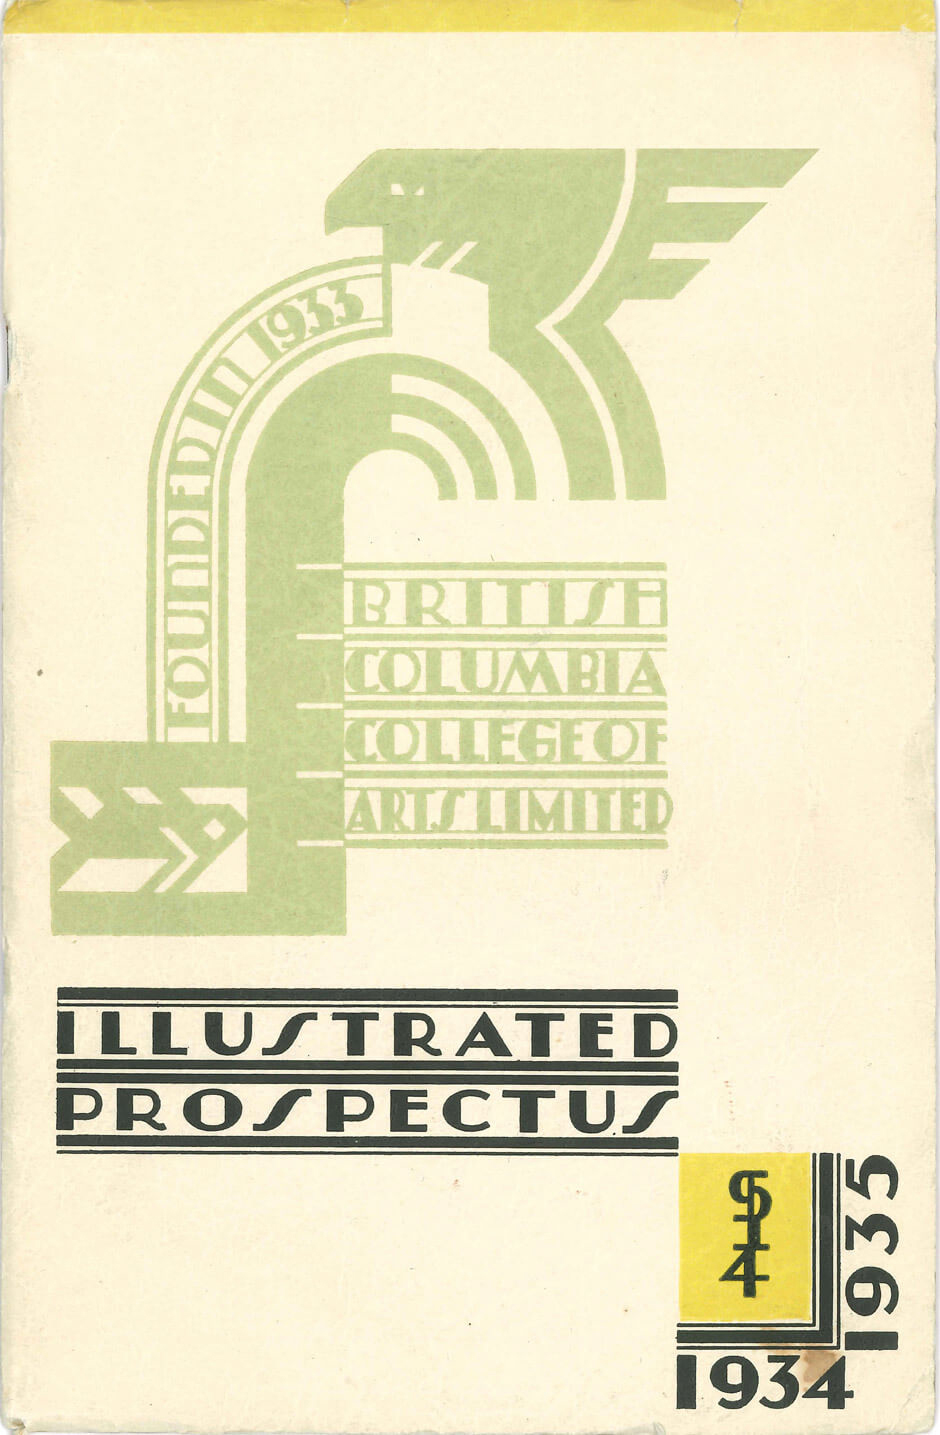 Art Canada Institute, Jock Macdonald, Cover of the British Columbia College of Arts Limited's Illustrated Prospectus for 1934-1935